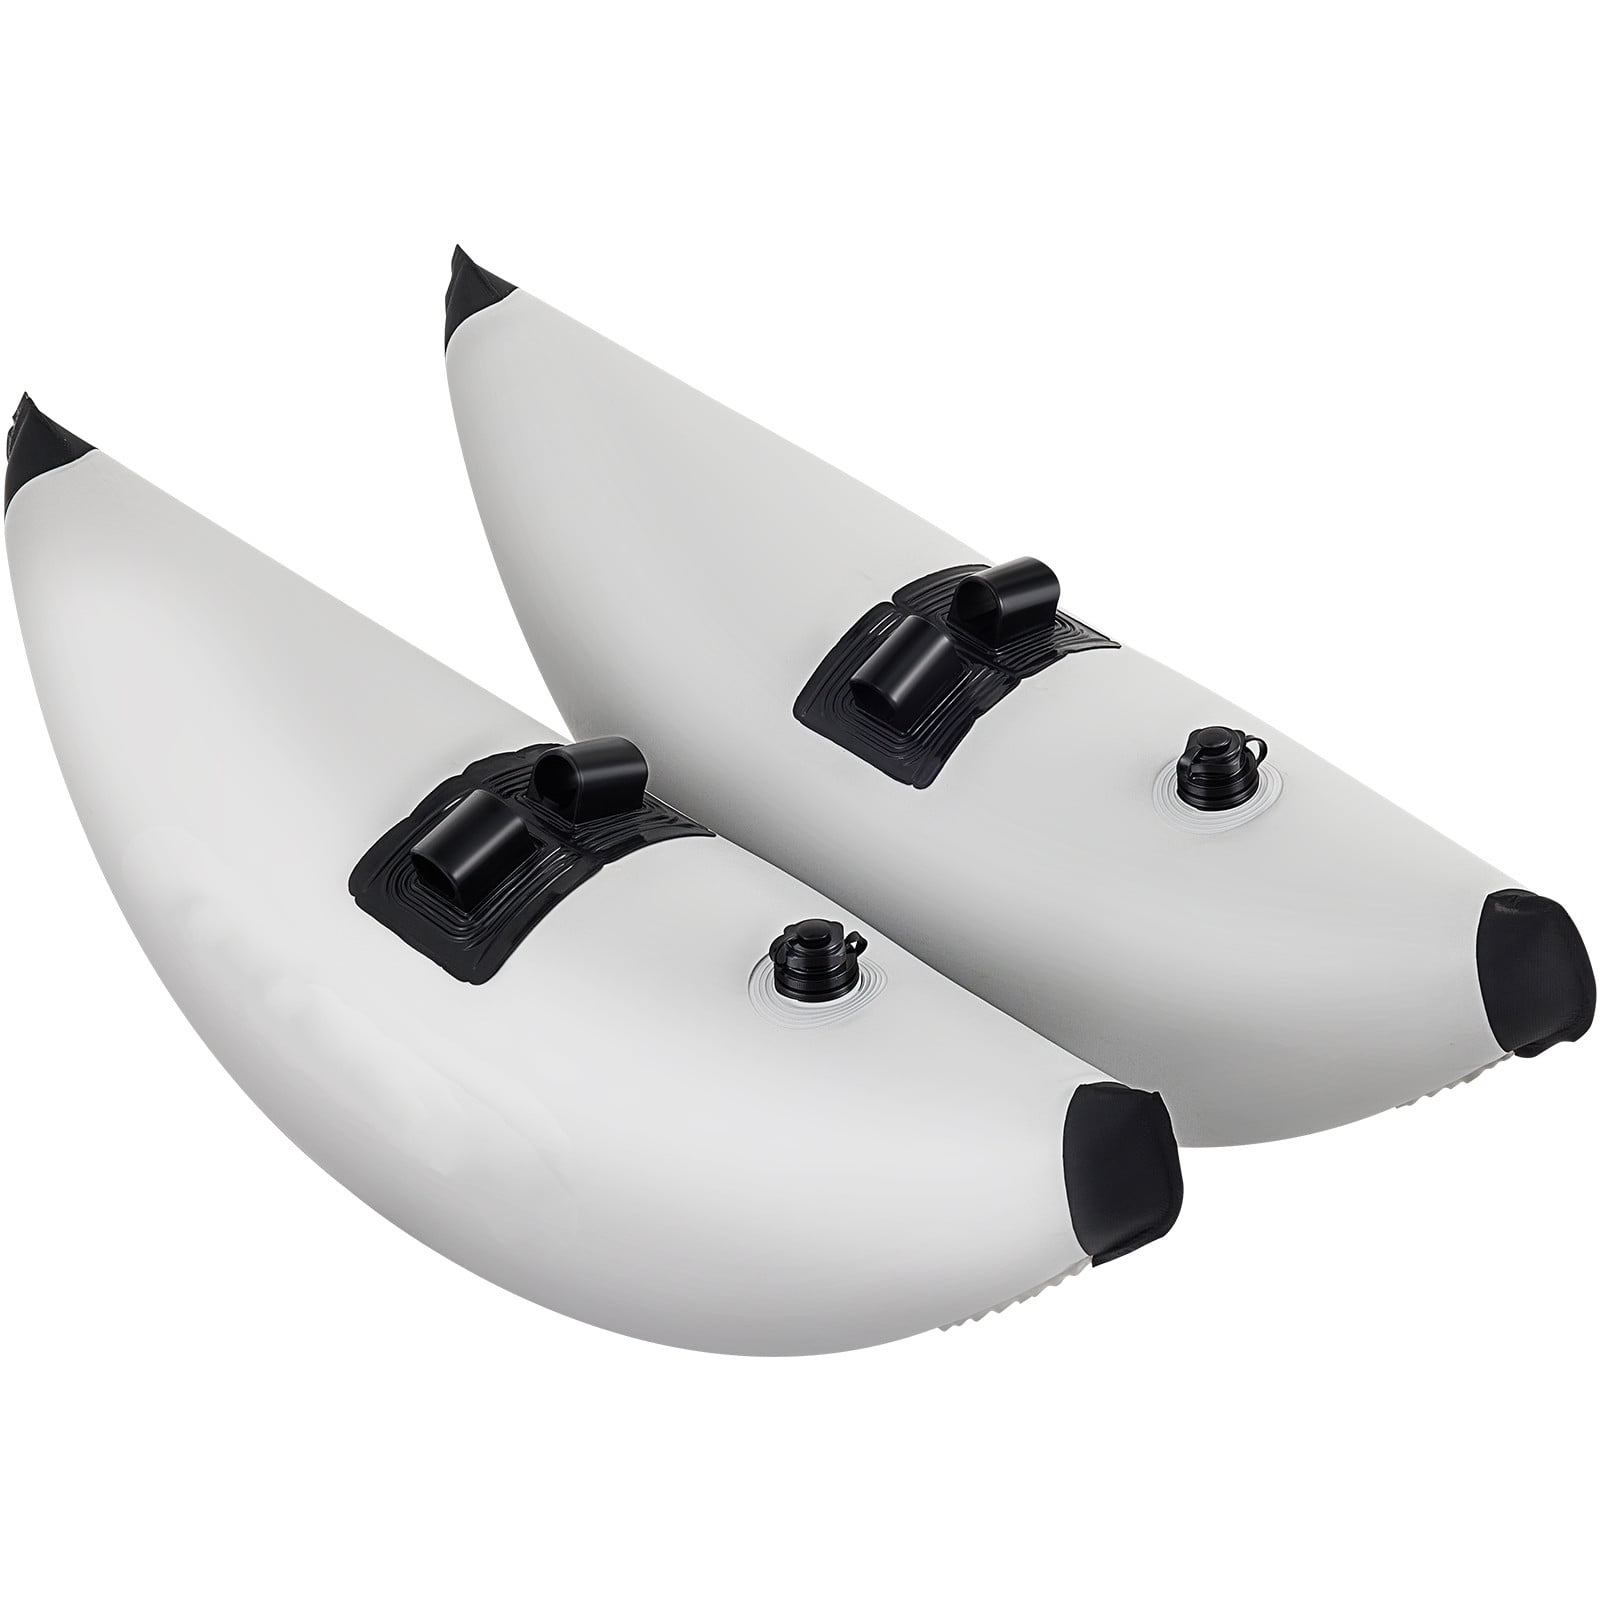 VEVOR Kayak Outrigger Stabilizer, 2 pcs, PVC Inflatable Outrigger